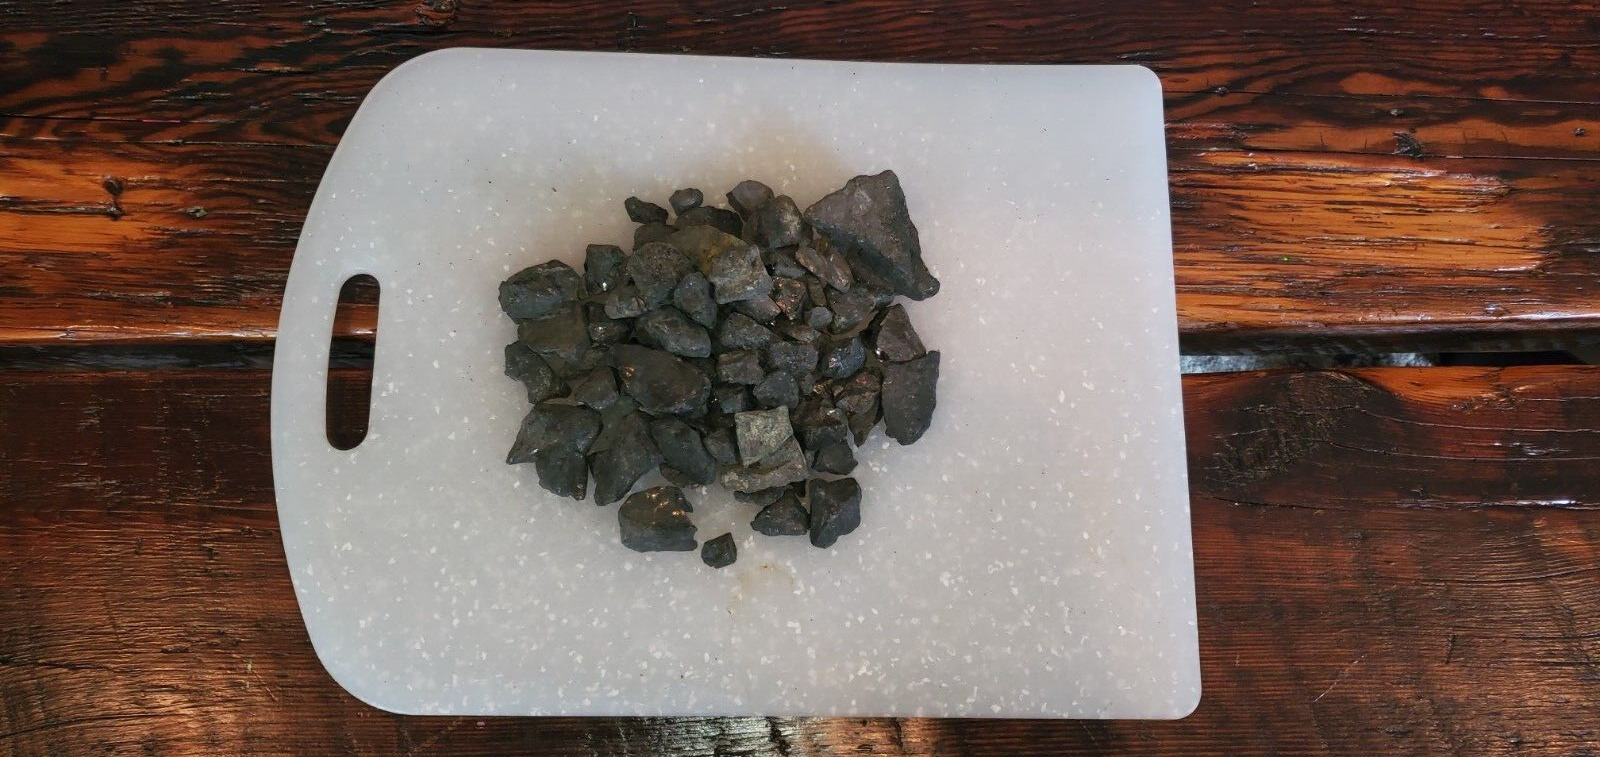 Anthracite Nut Coal 5 lbs Screened Blacksmith Knifemaking Teacher Aid Christmas